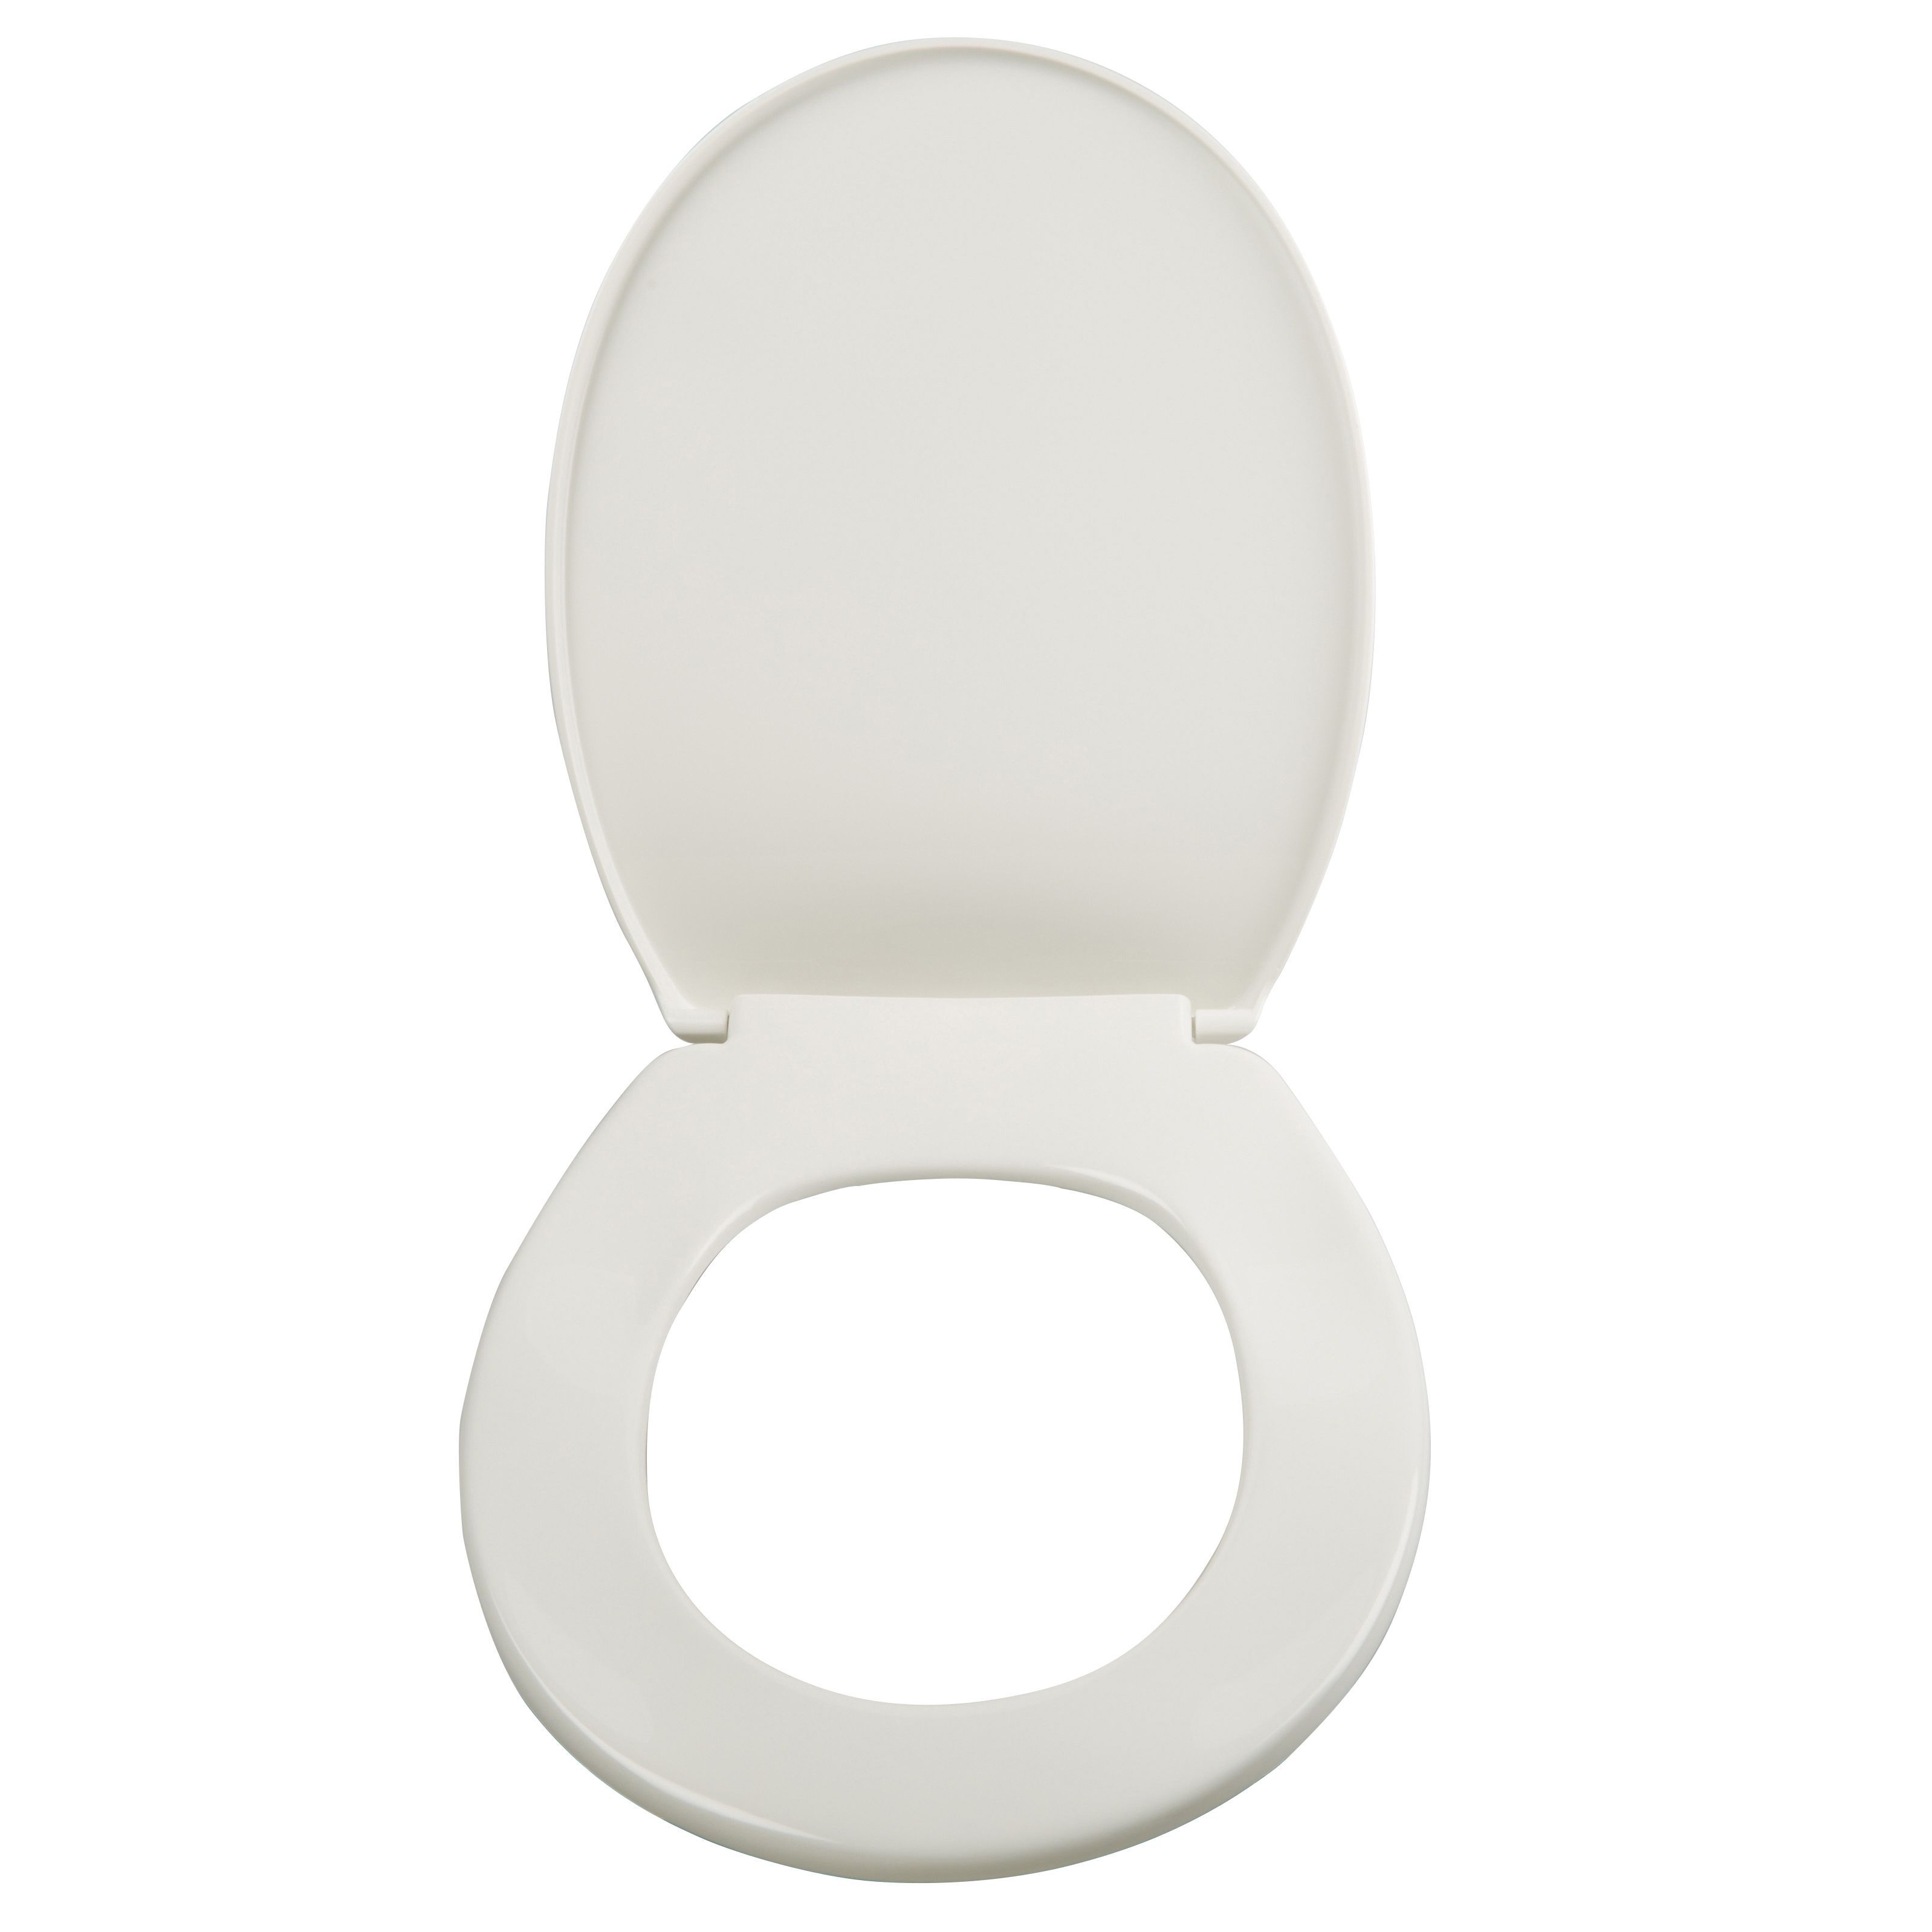 Himara White Standard close Toilet seat